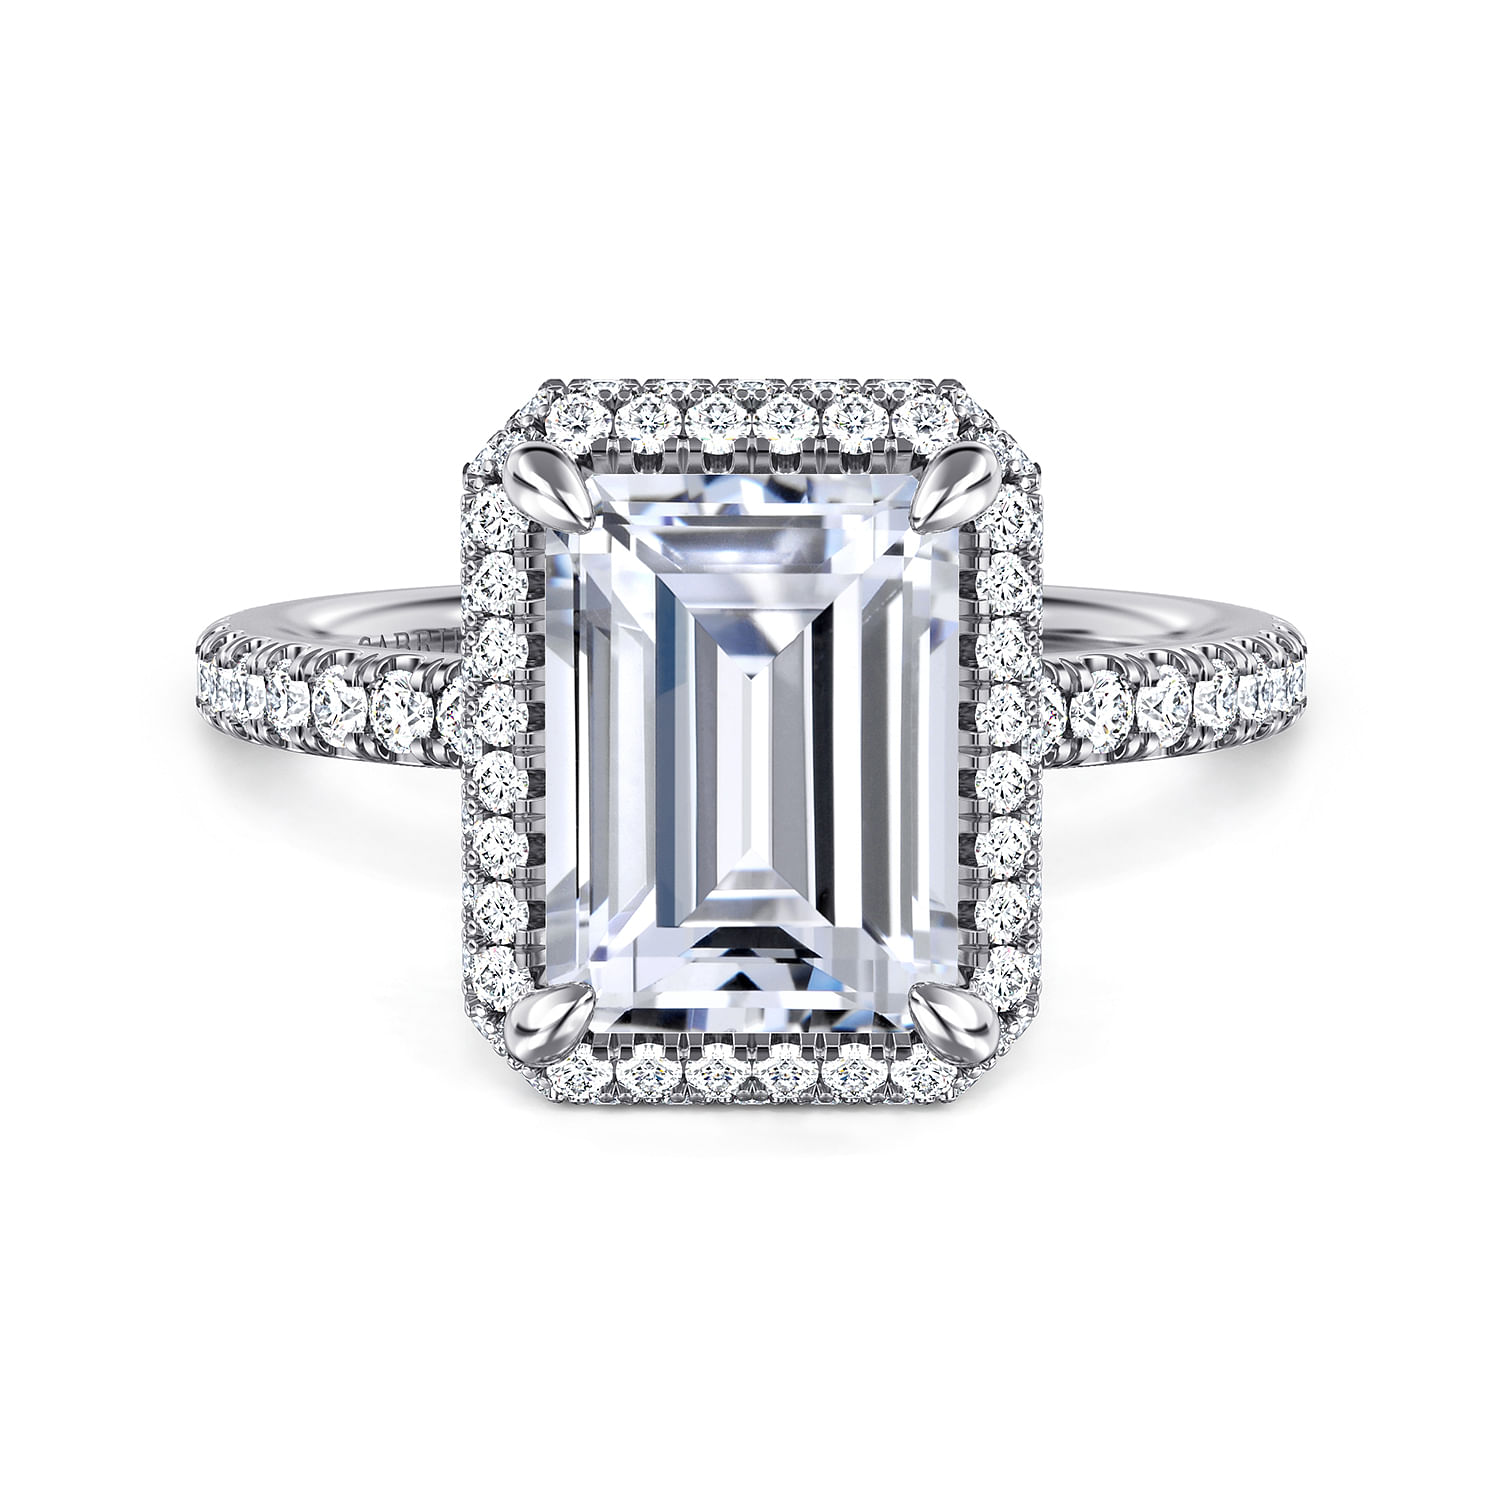 18K White Gold Emerald Cut Diamond Engagement Ring